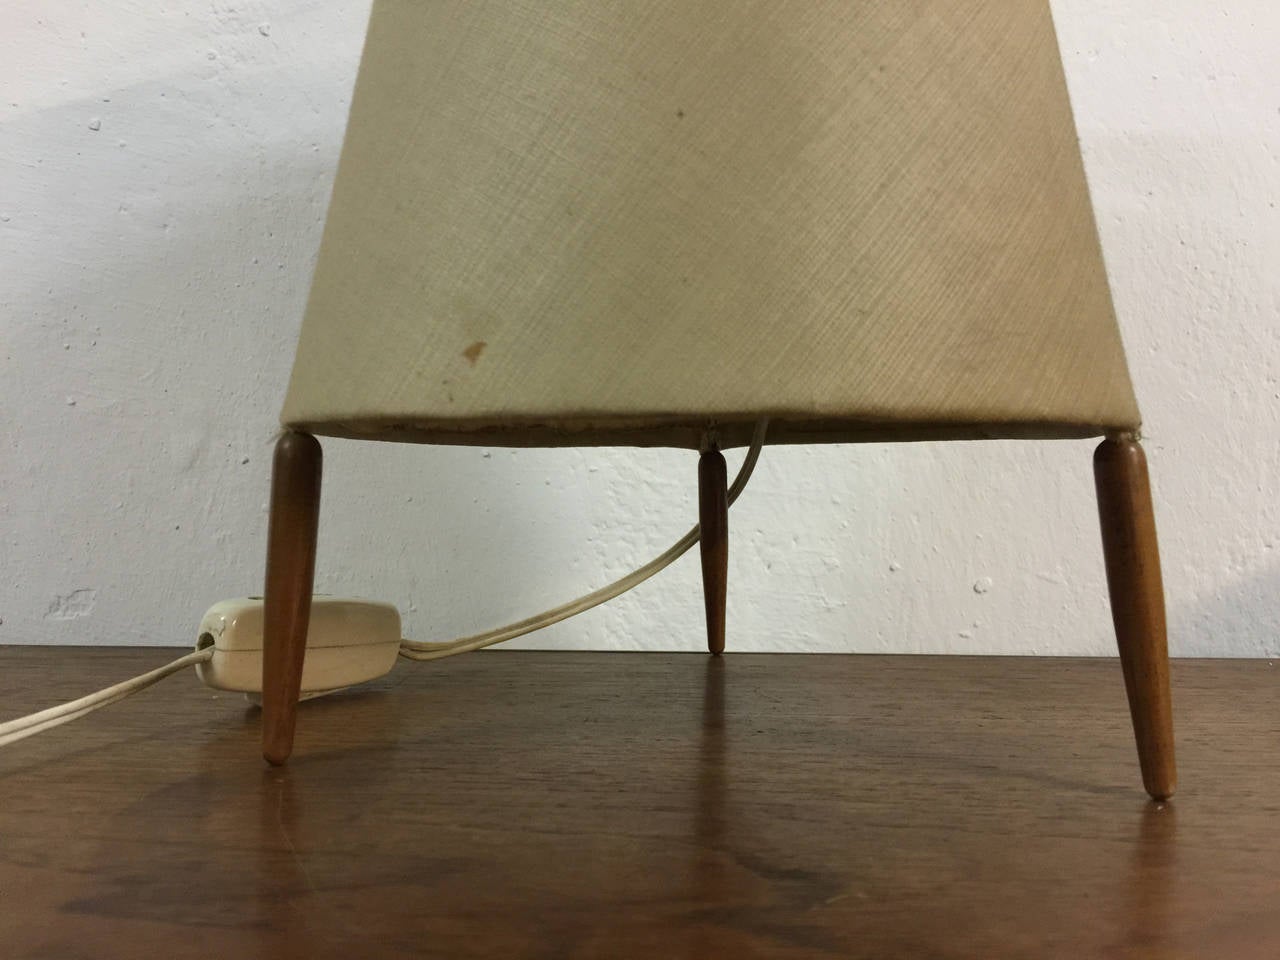 Austrian Model 4375 Eichhörnchen or Squirrel Table Lamp by Kalmar